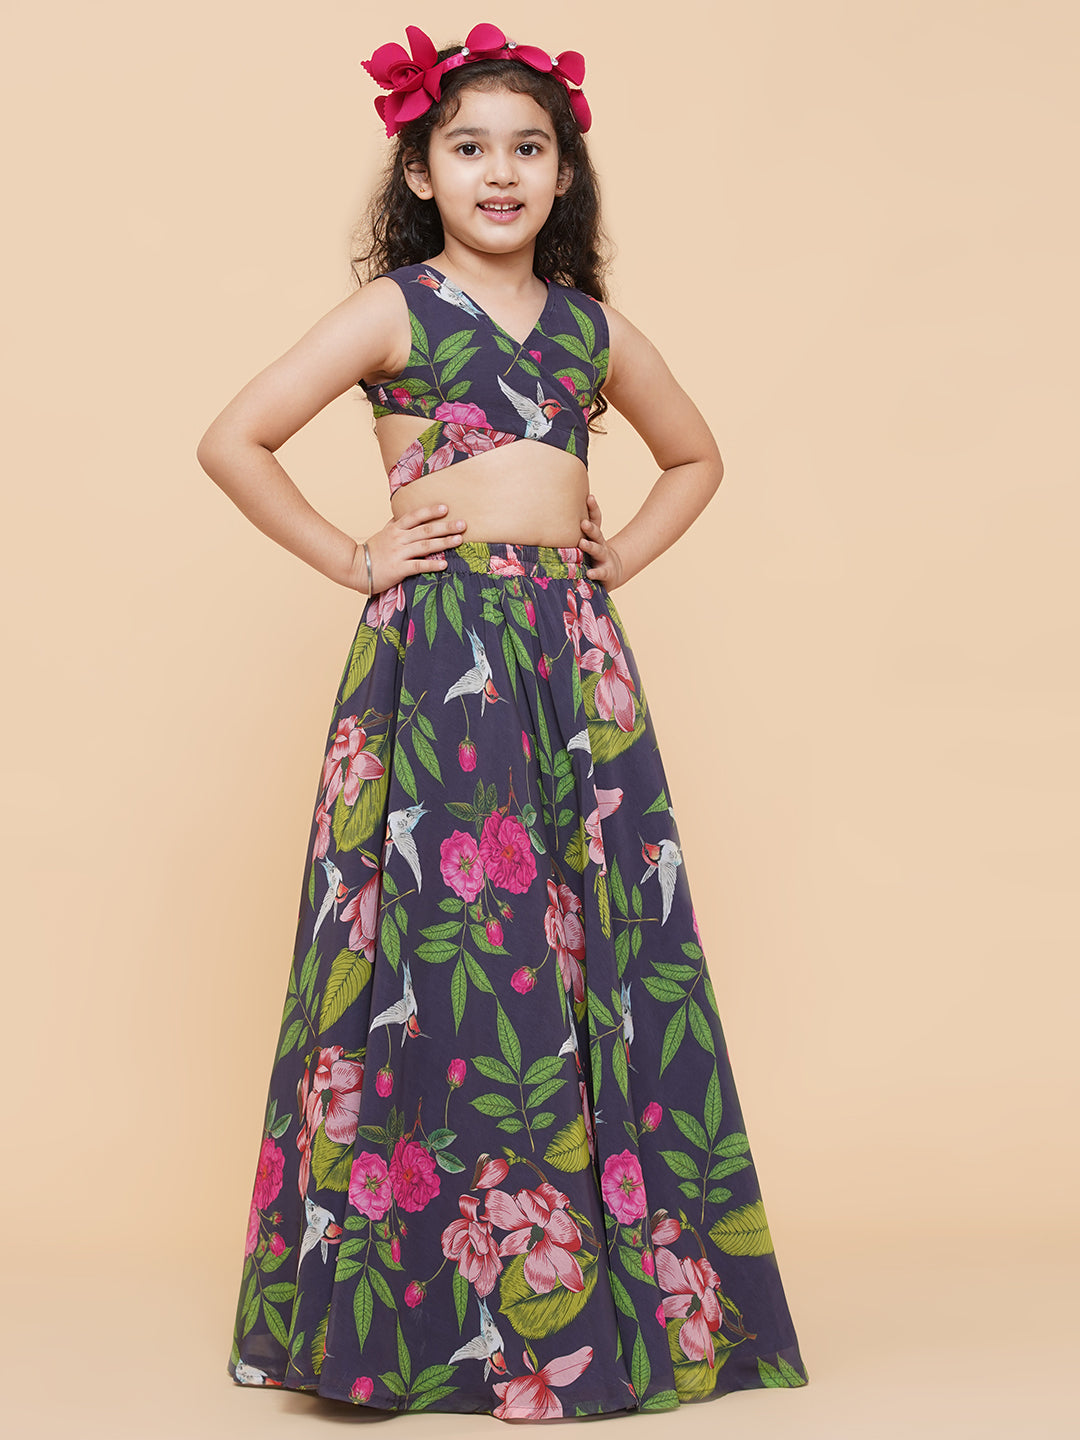 Unbranded Ethnic Wear Kids Festival Dress,Girl Lehenga India | Ubuy